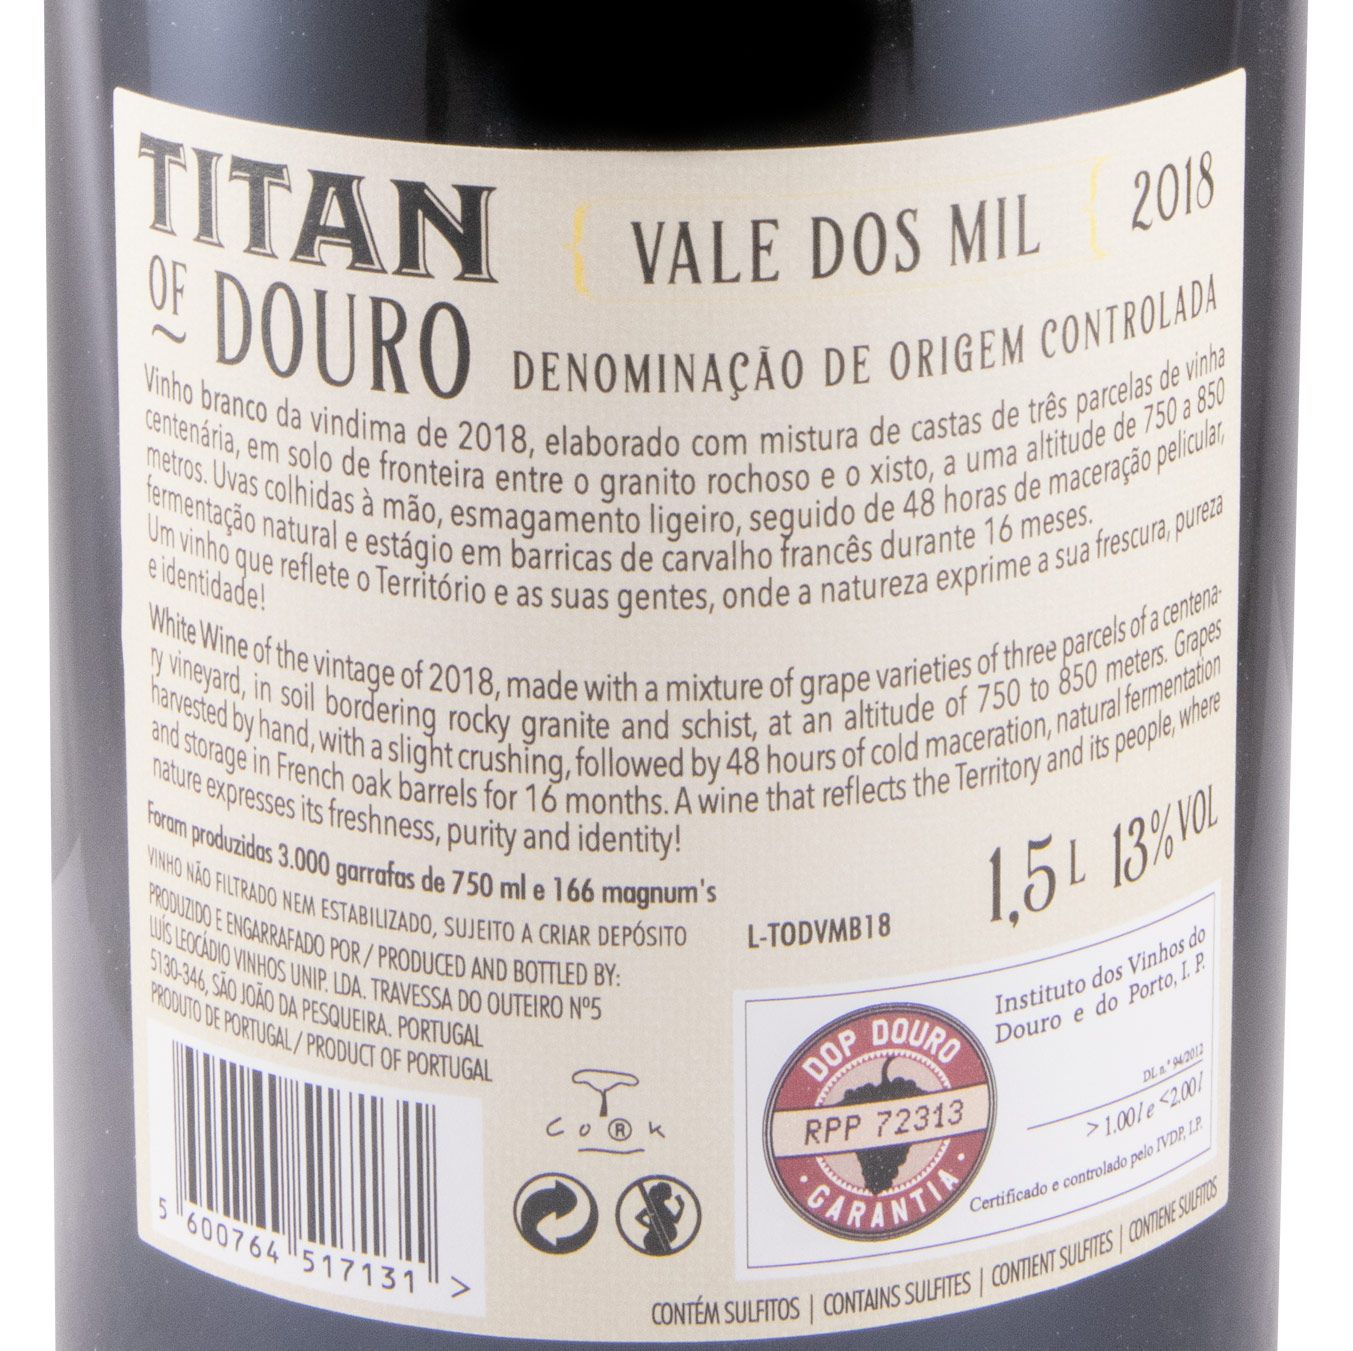 2018 Titan of Douro Vale dos Mil branco 1,5L